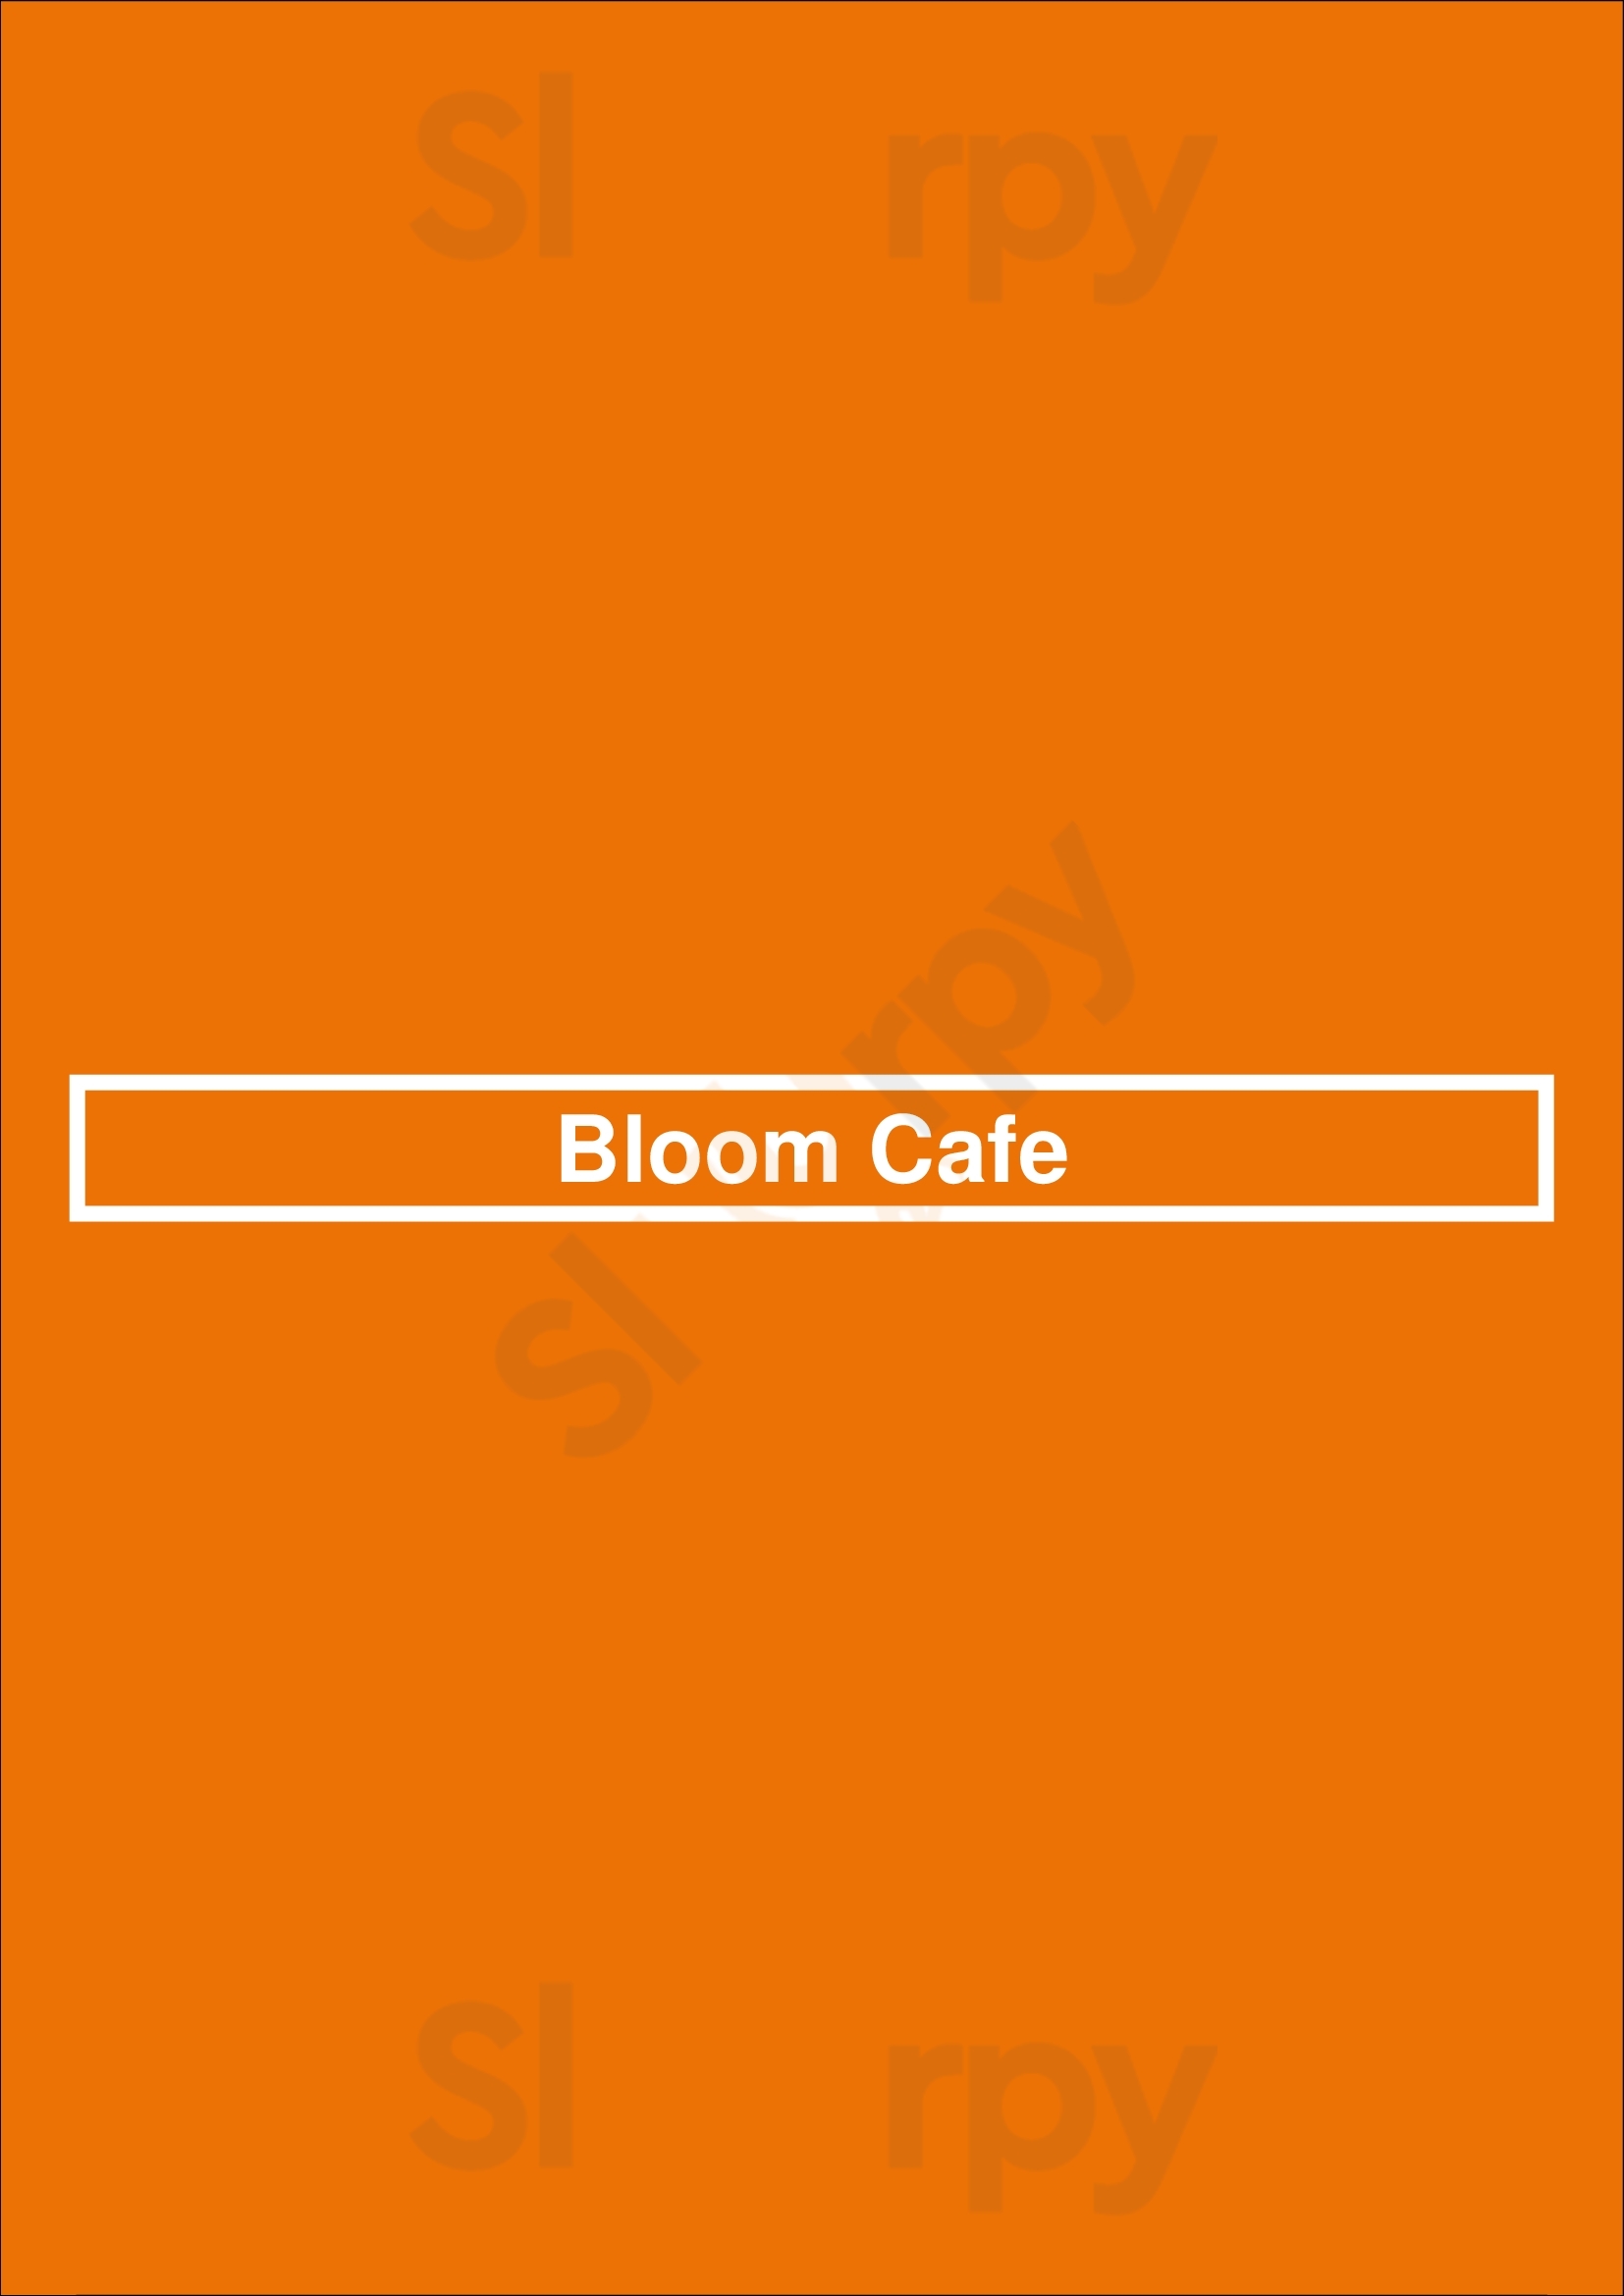 Bloom Cafe Saint Louis Menu - 1